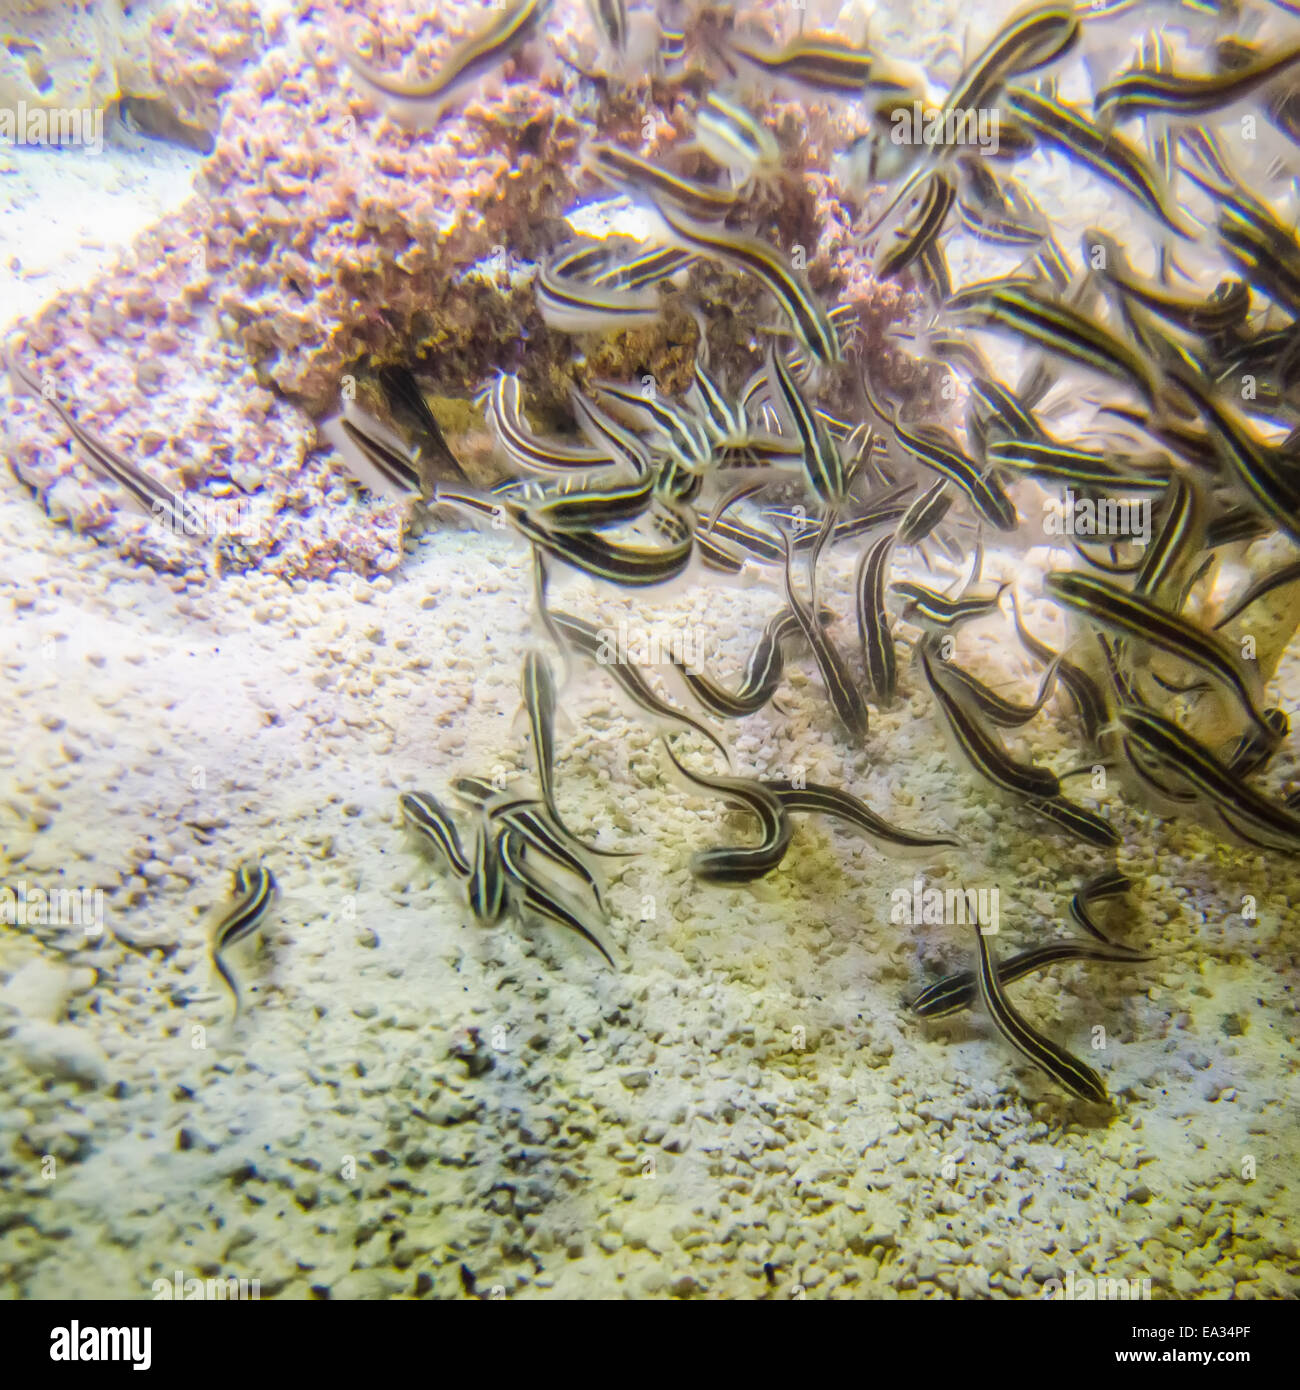 salt water fish in the ocean or aquarium Stock Photo